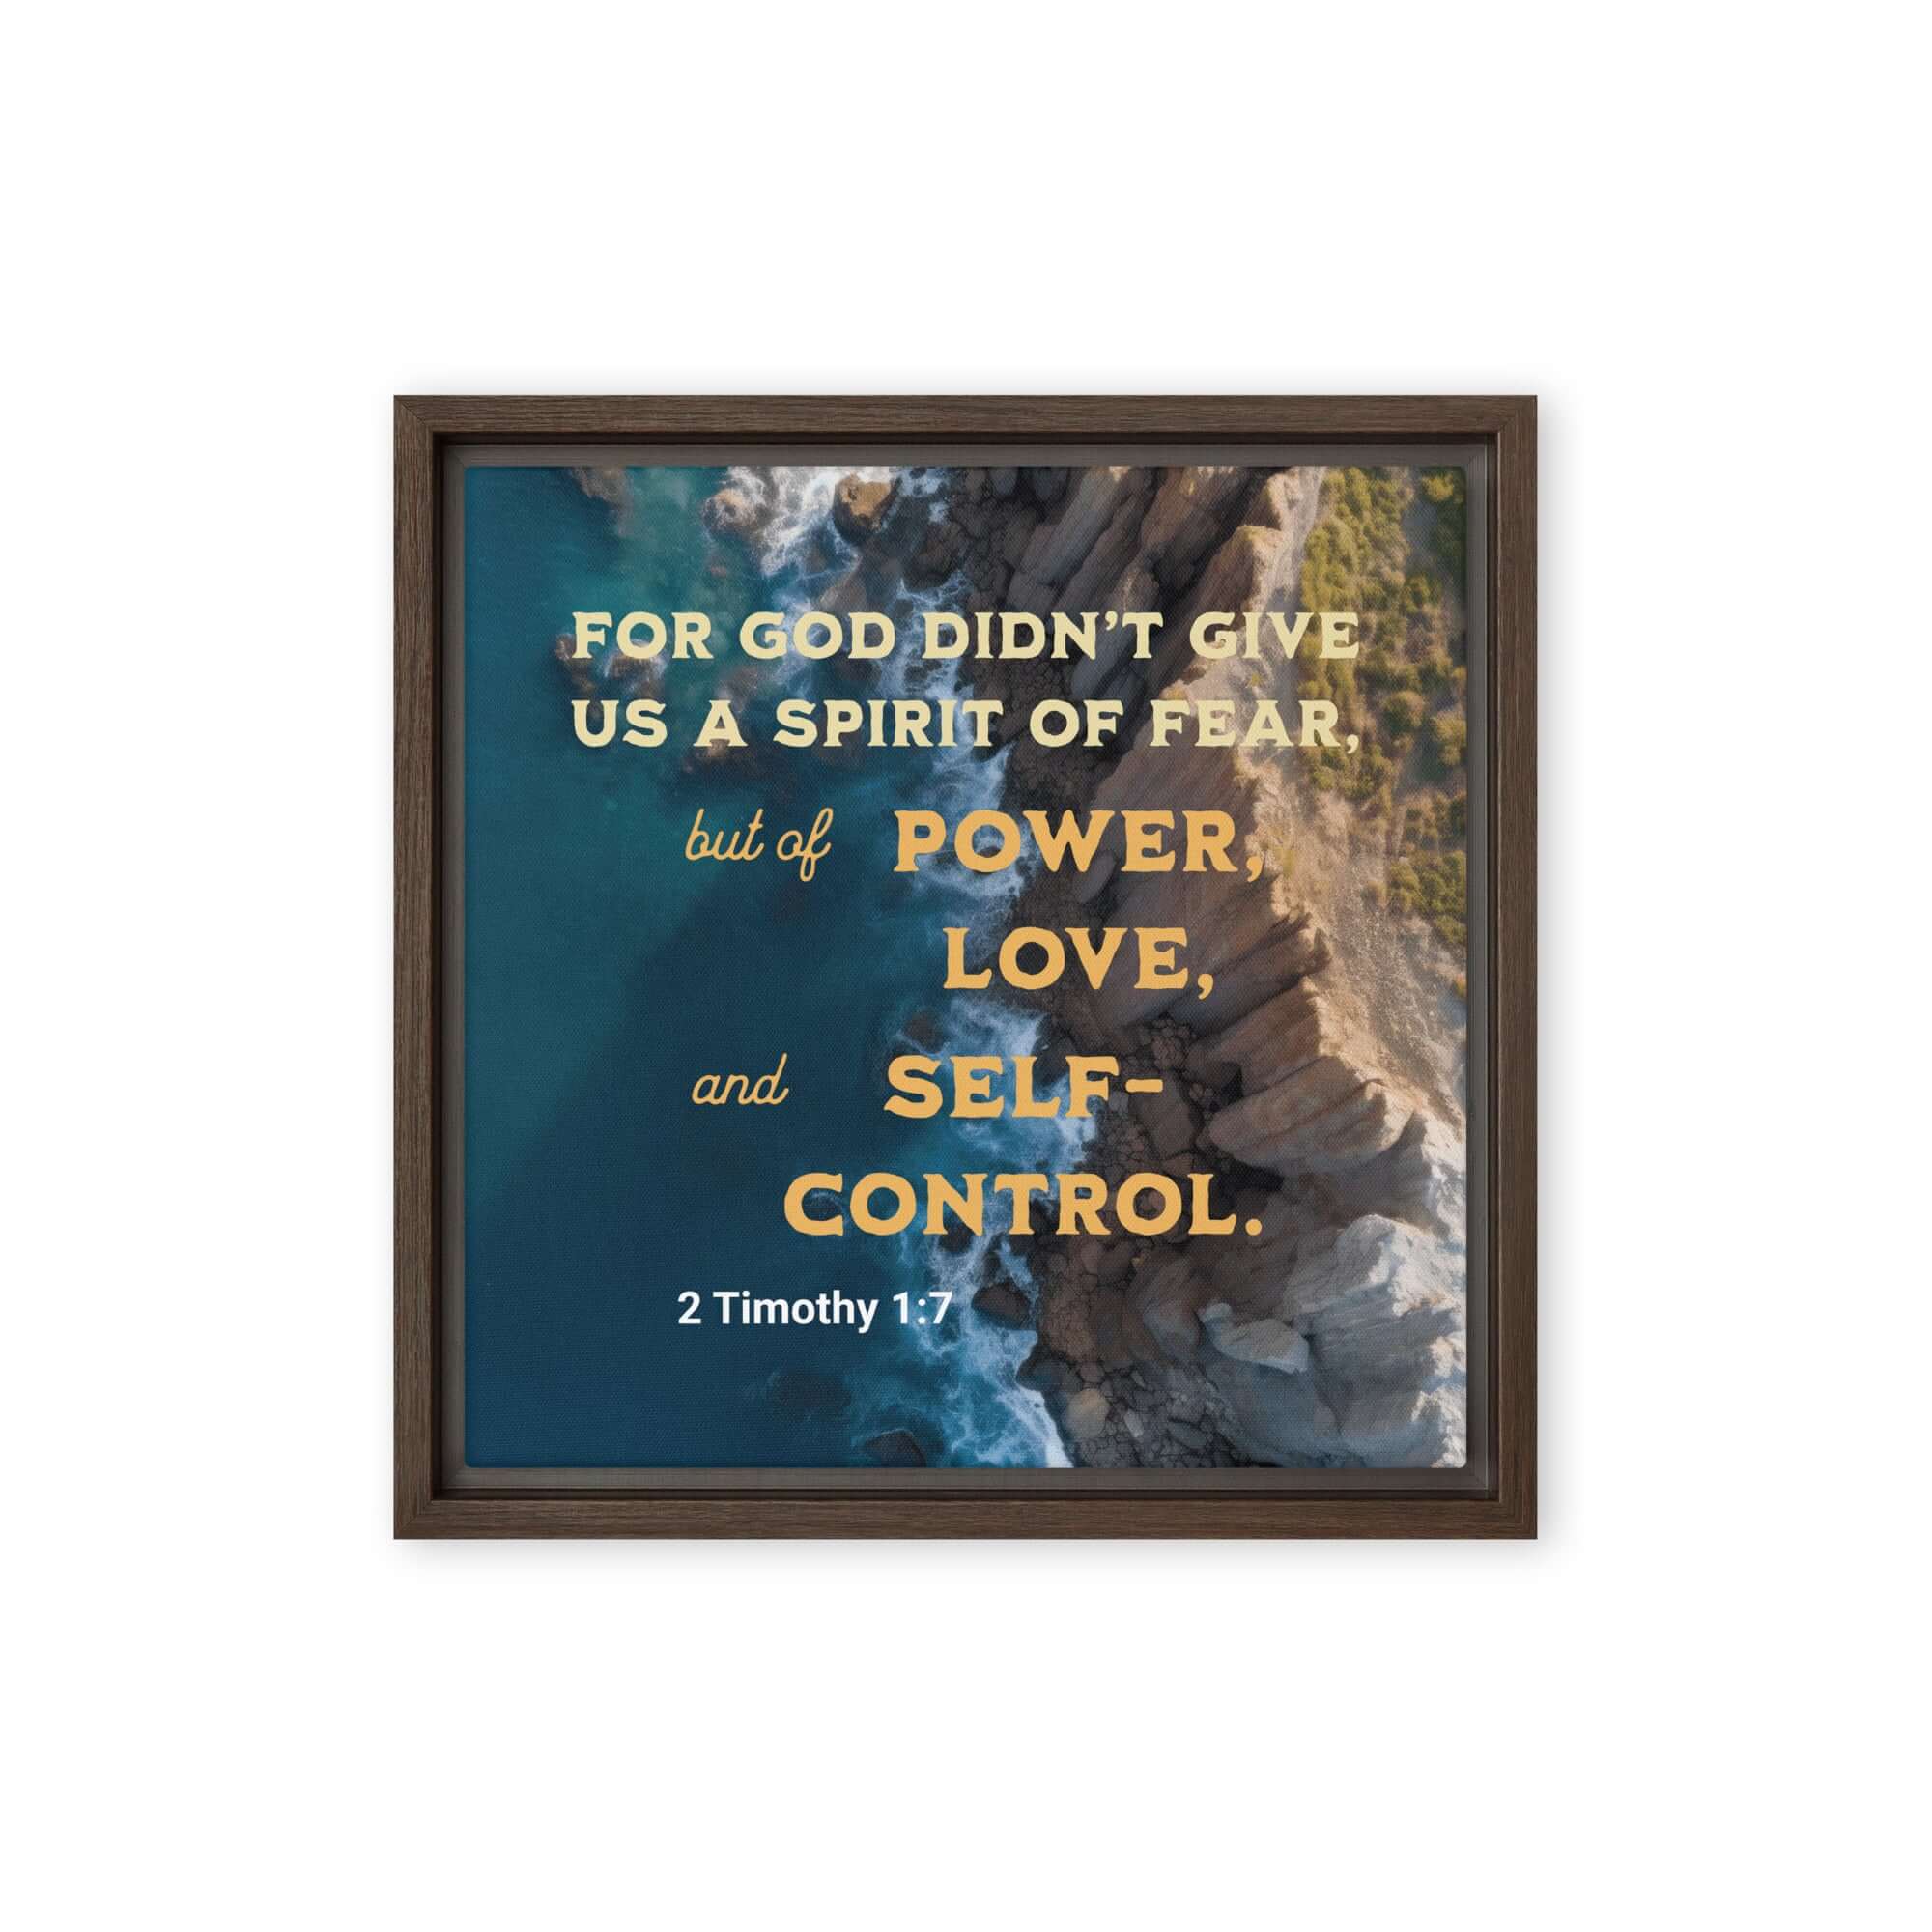 2 Tim 1:7 - Bible Verse, Power, Love, Self-Control Framed Canvas